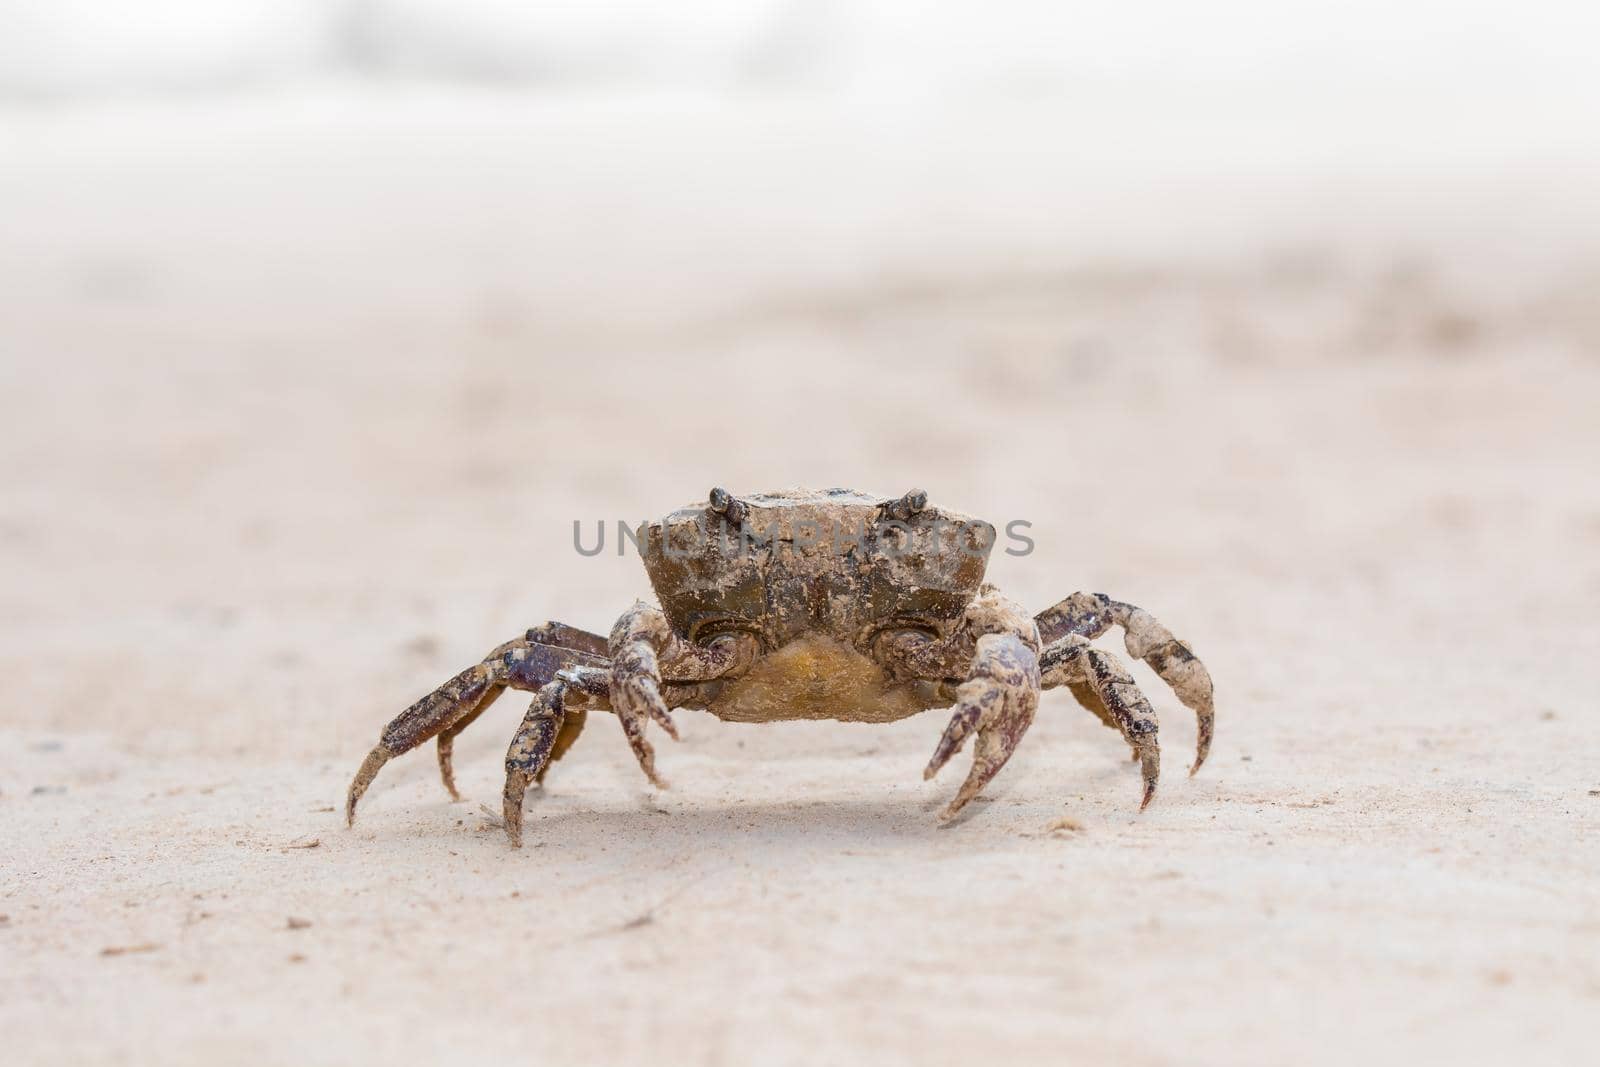 Crab walking on sandy soil in nature.